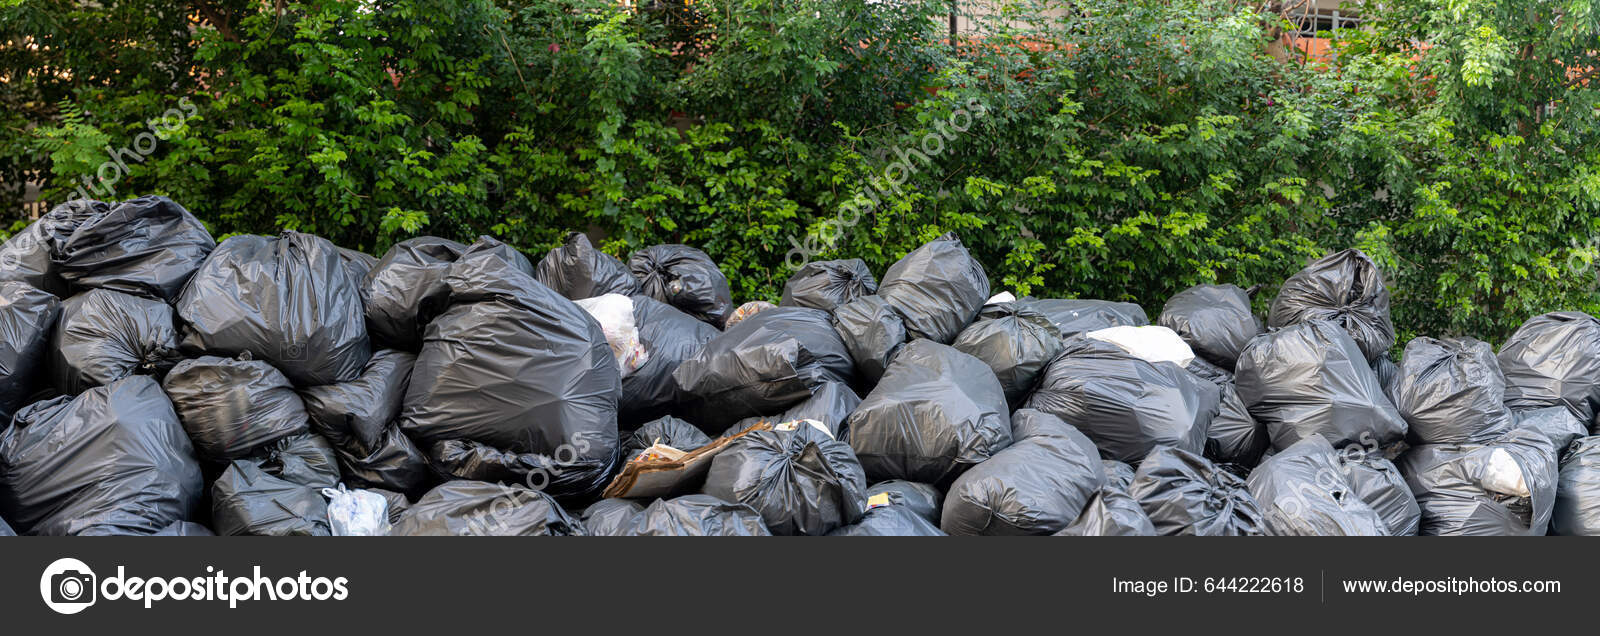 Background garbage bag black bin waste, Garbage dump, Bin,Trash, Garbage,  Rubbish, Plastic Bags pile junk garbage Trash texture, Background waste  plastic bin bag. Stock Photo